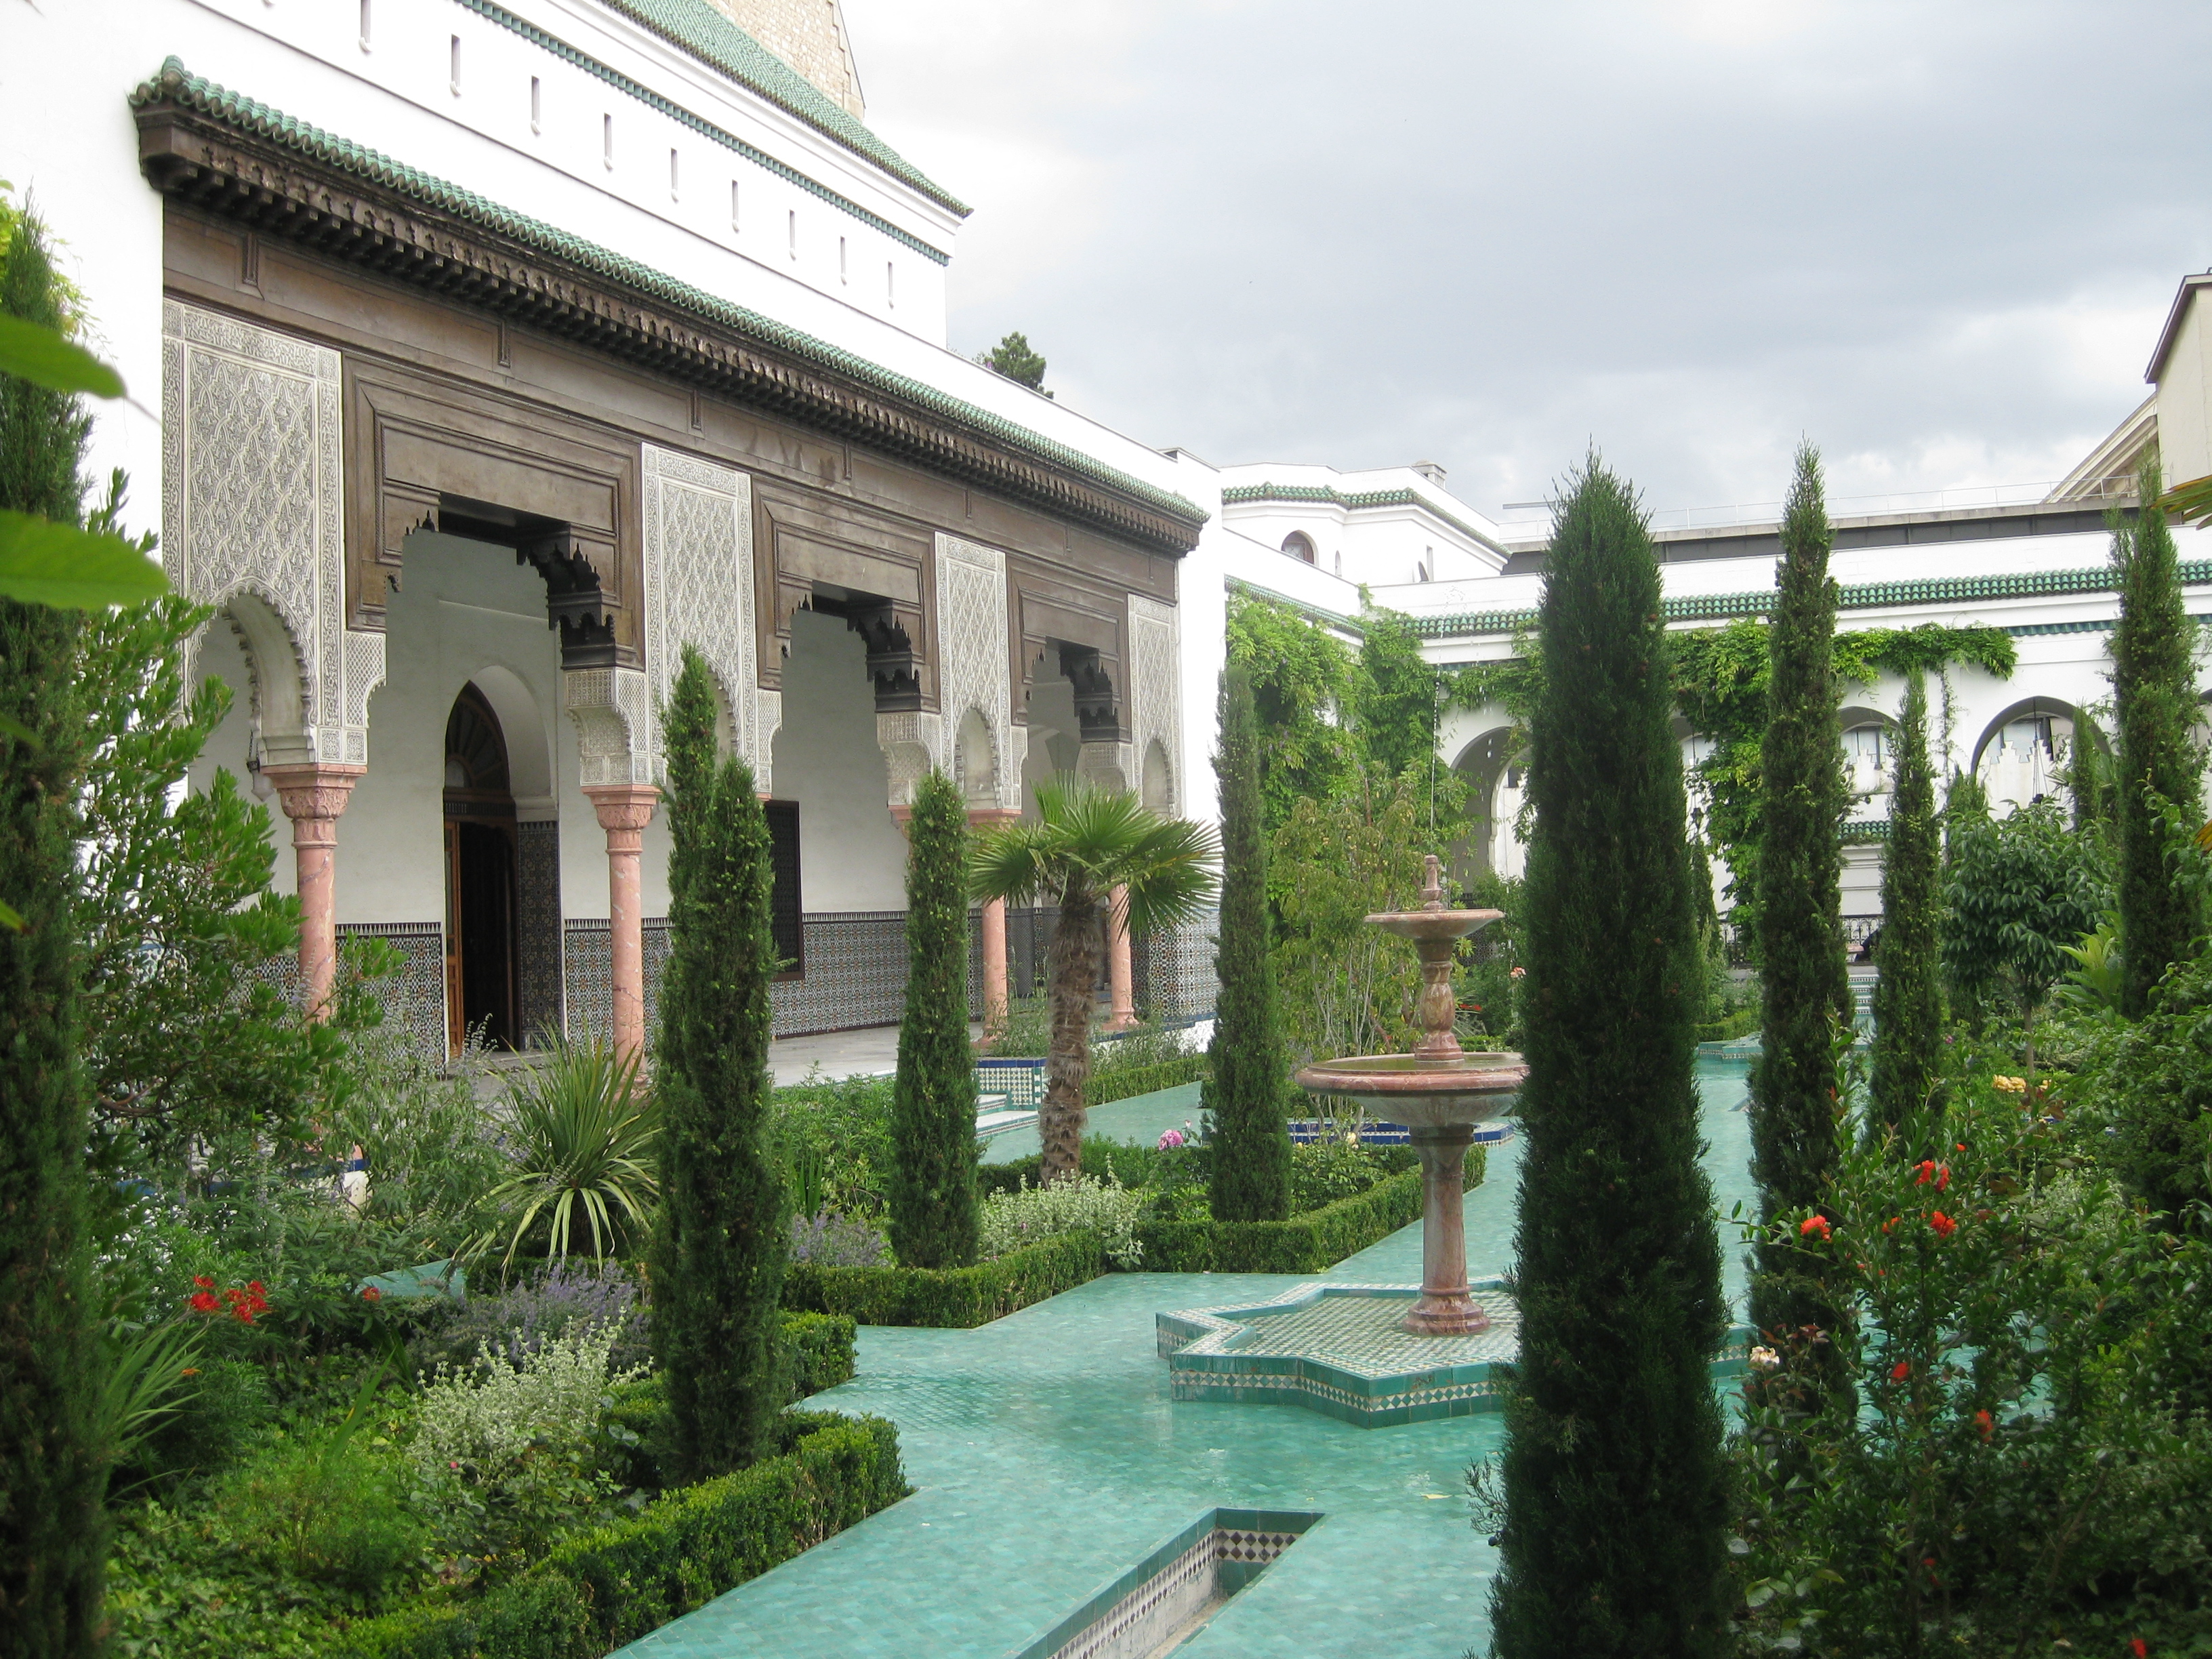 mosque courtyard